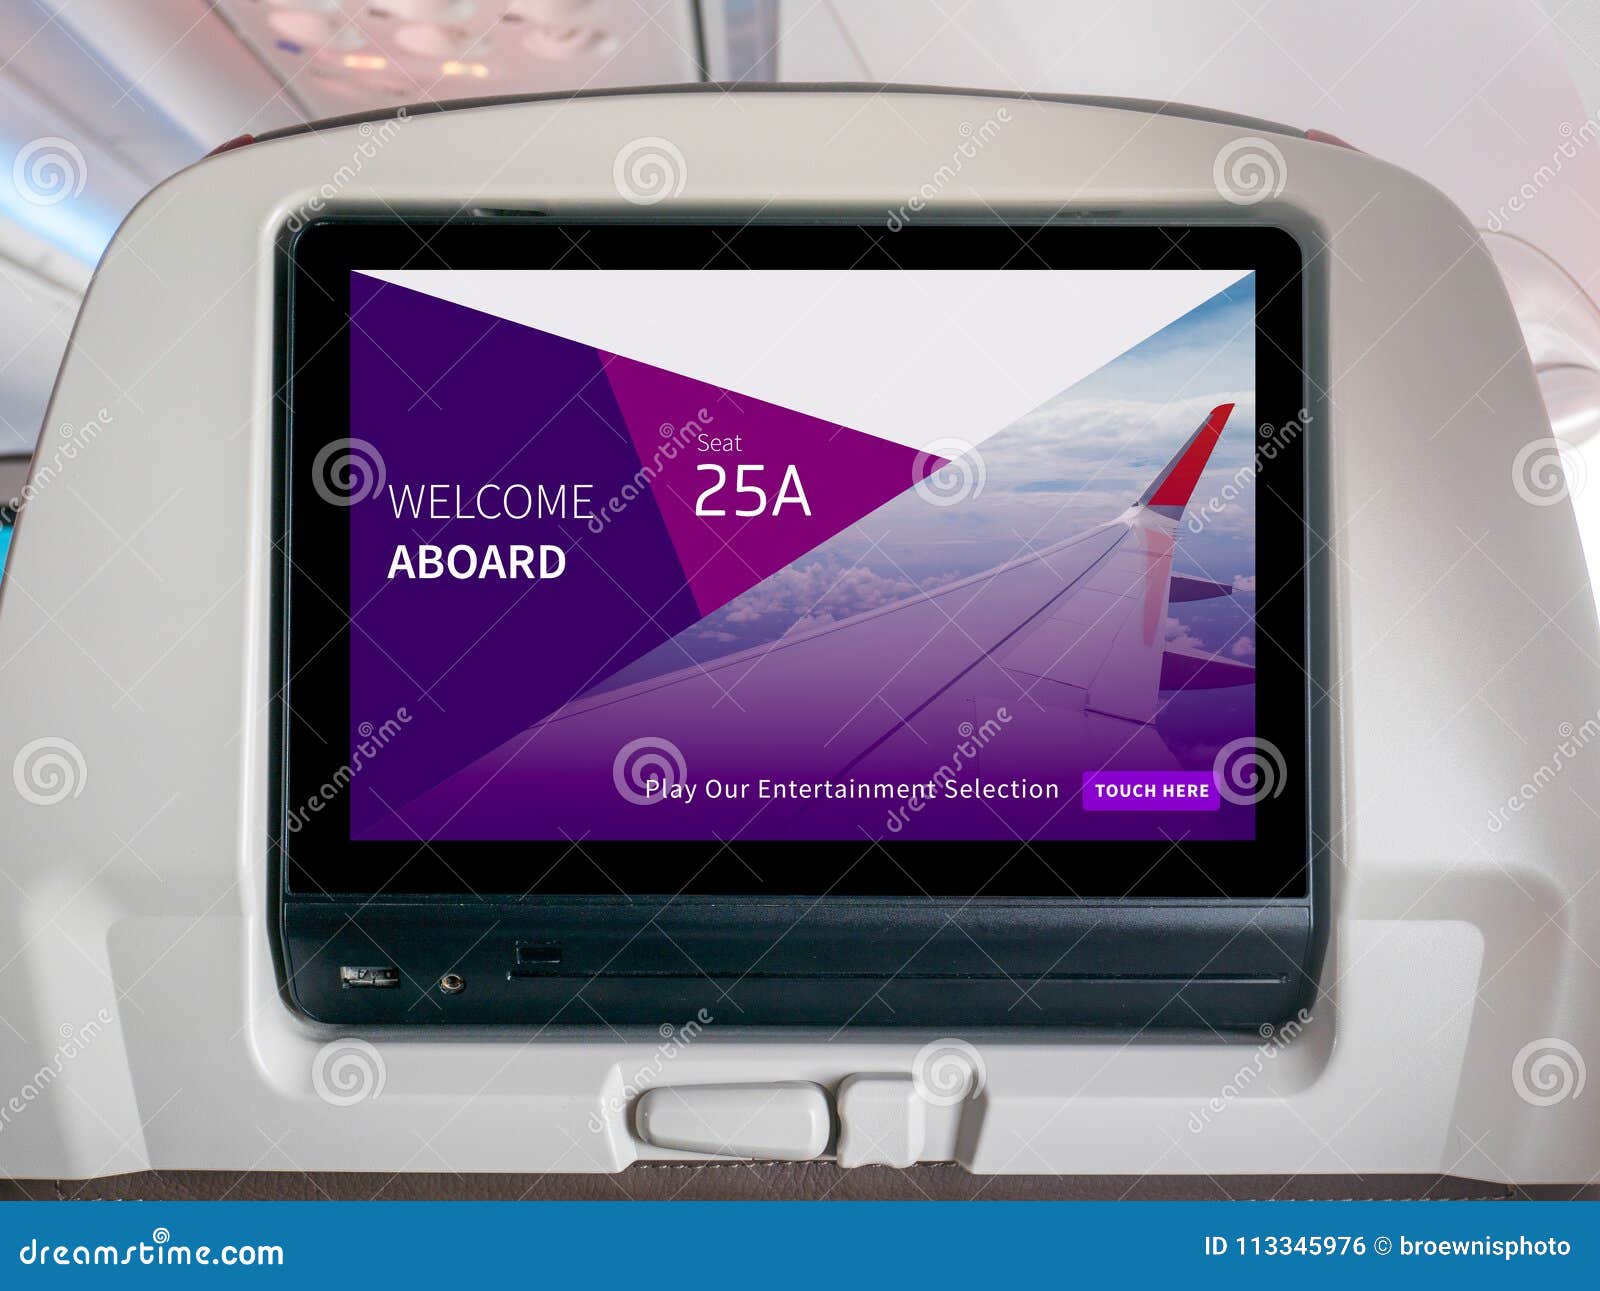 in-flight entertainment screen, inflight screen, seatback screen in airplane